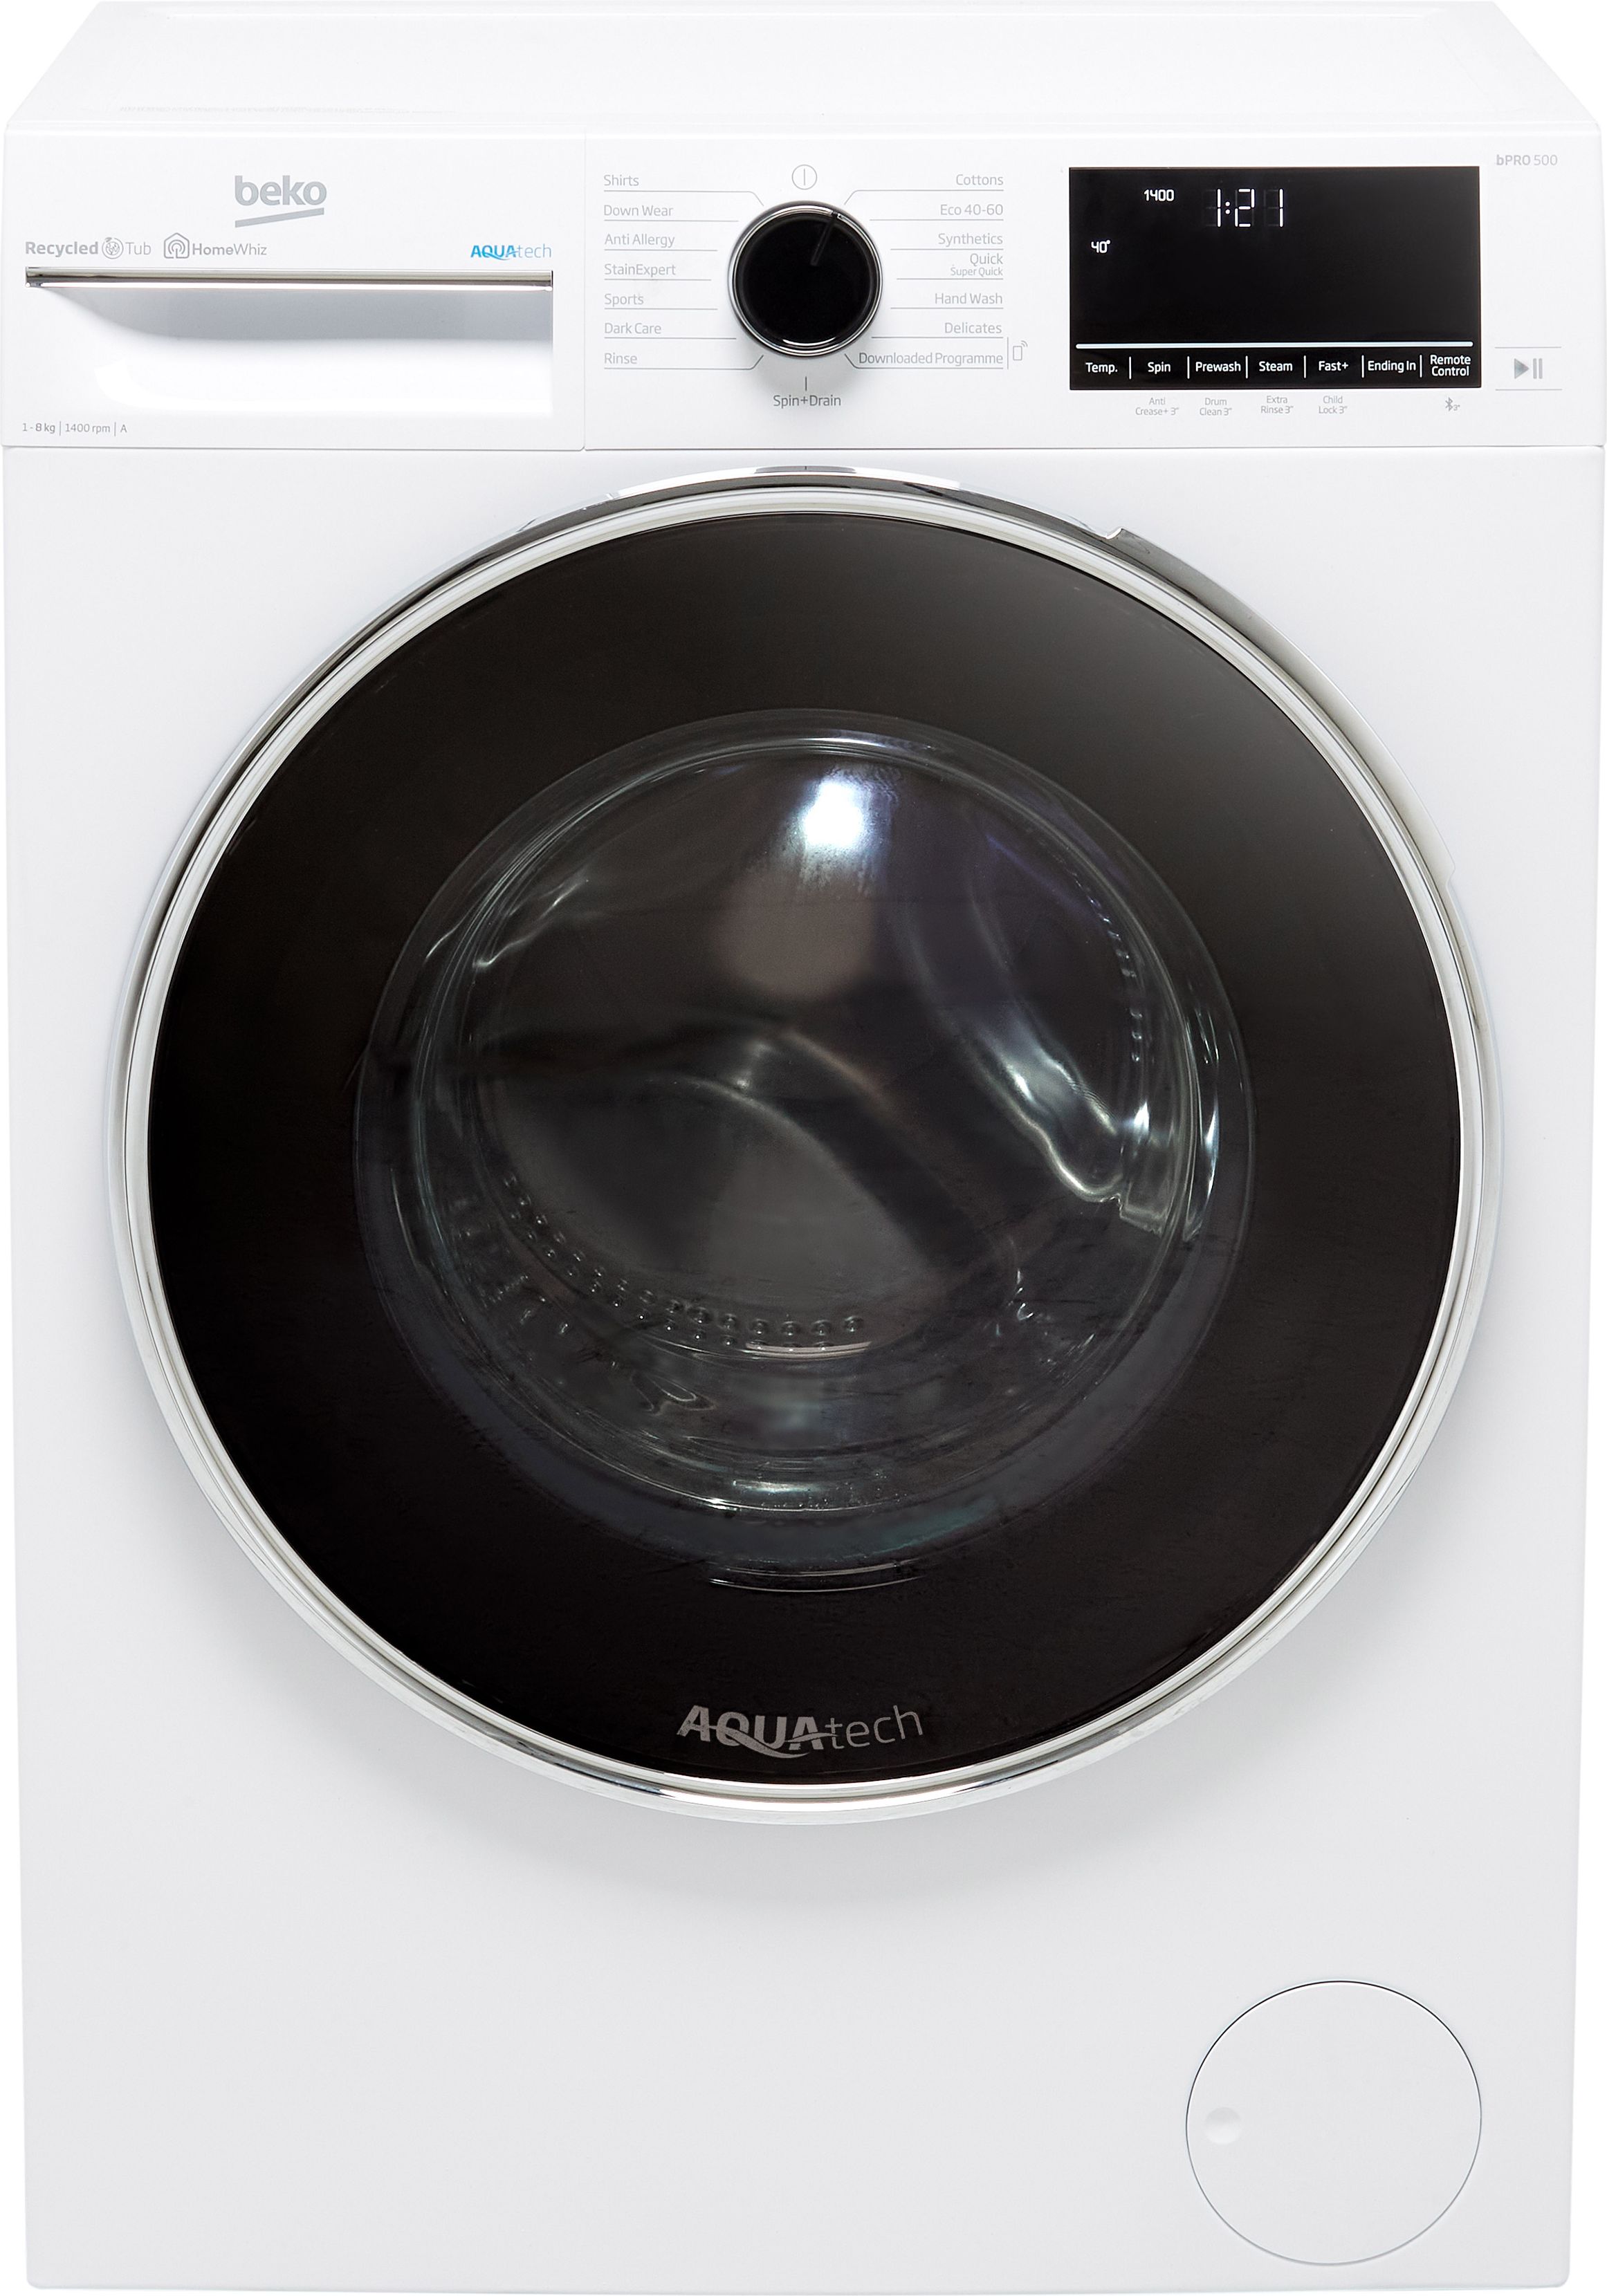 Beko Aquatech RecycledTub B5W5841AW 8kg Washing Machine with 1400 rpm - White - A Rated White